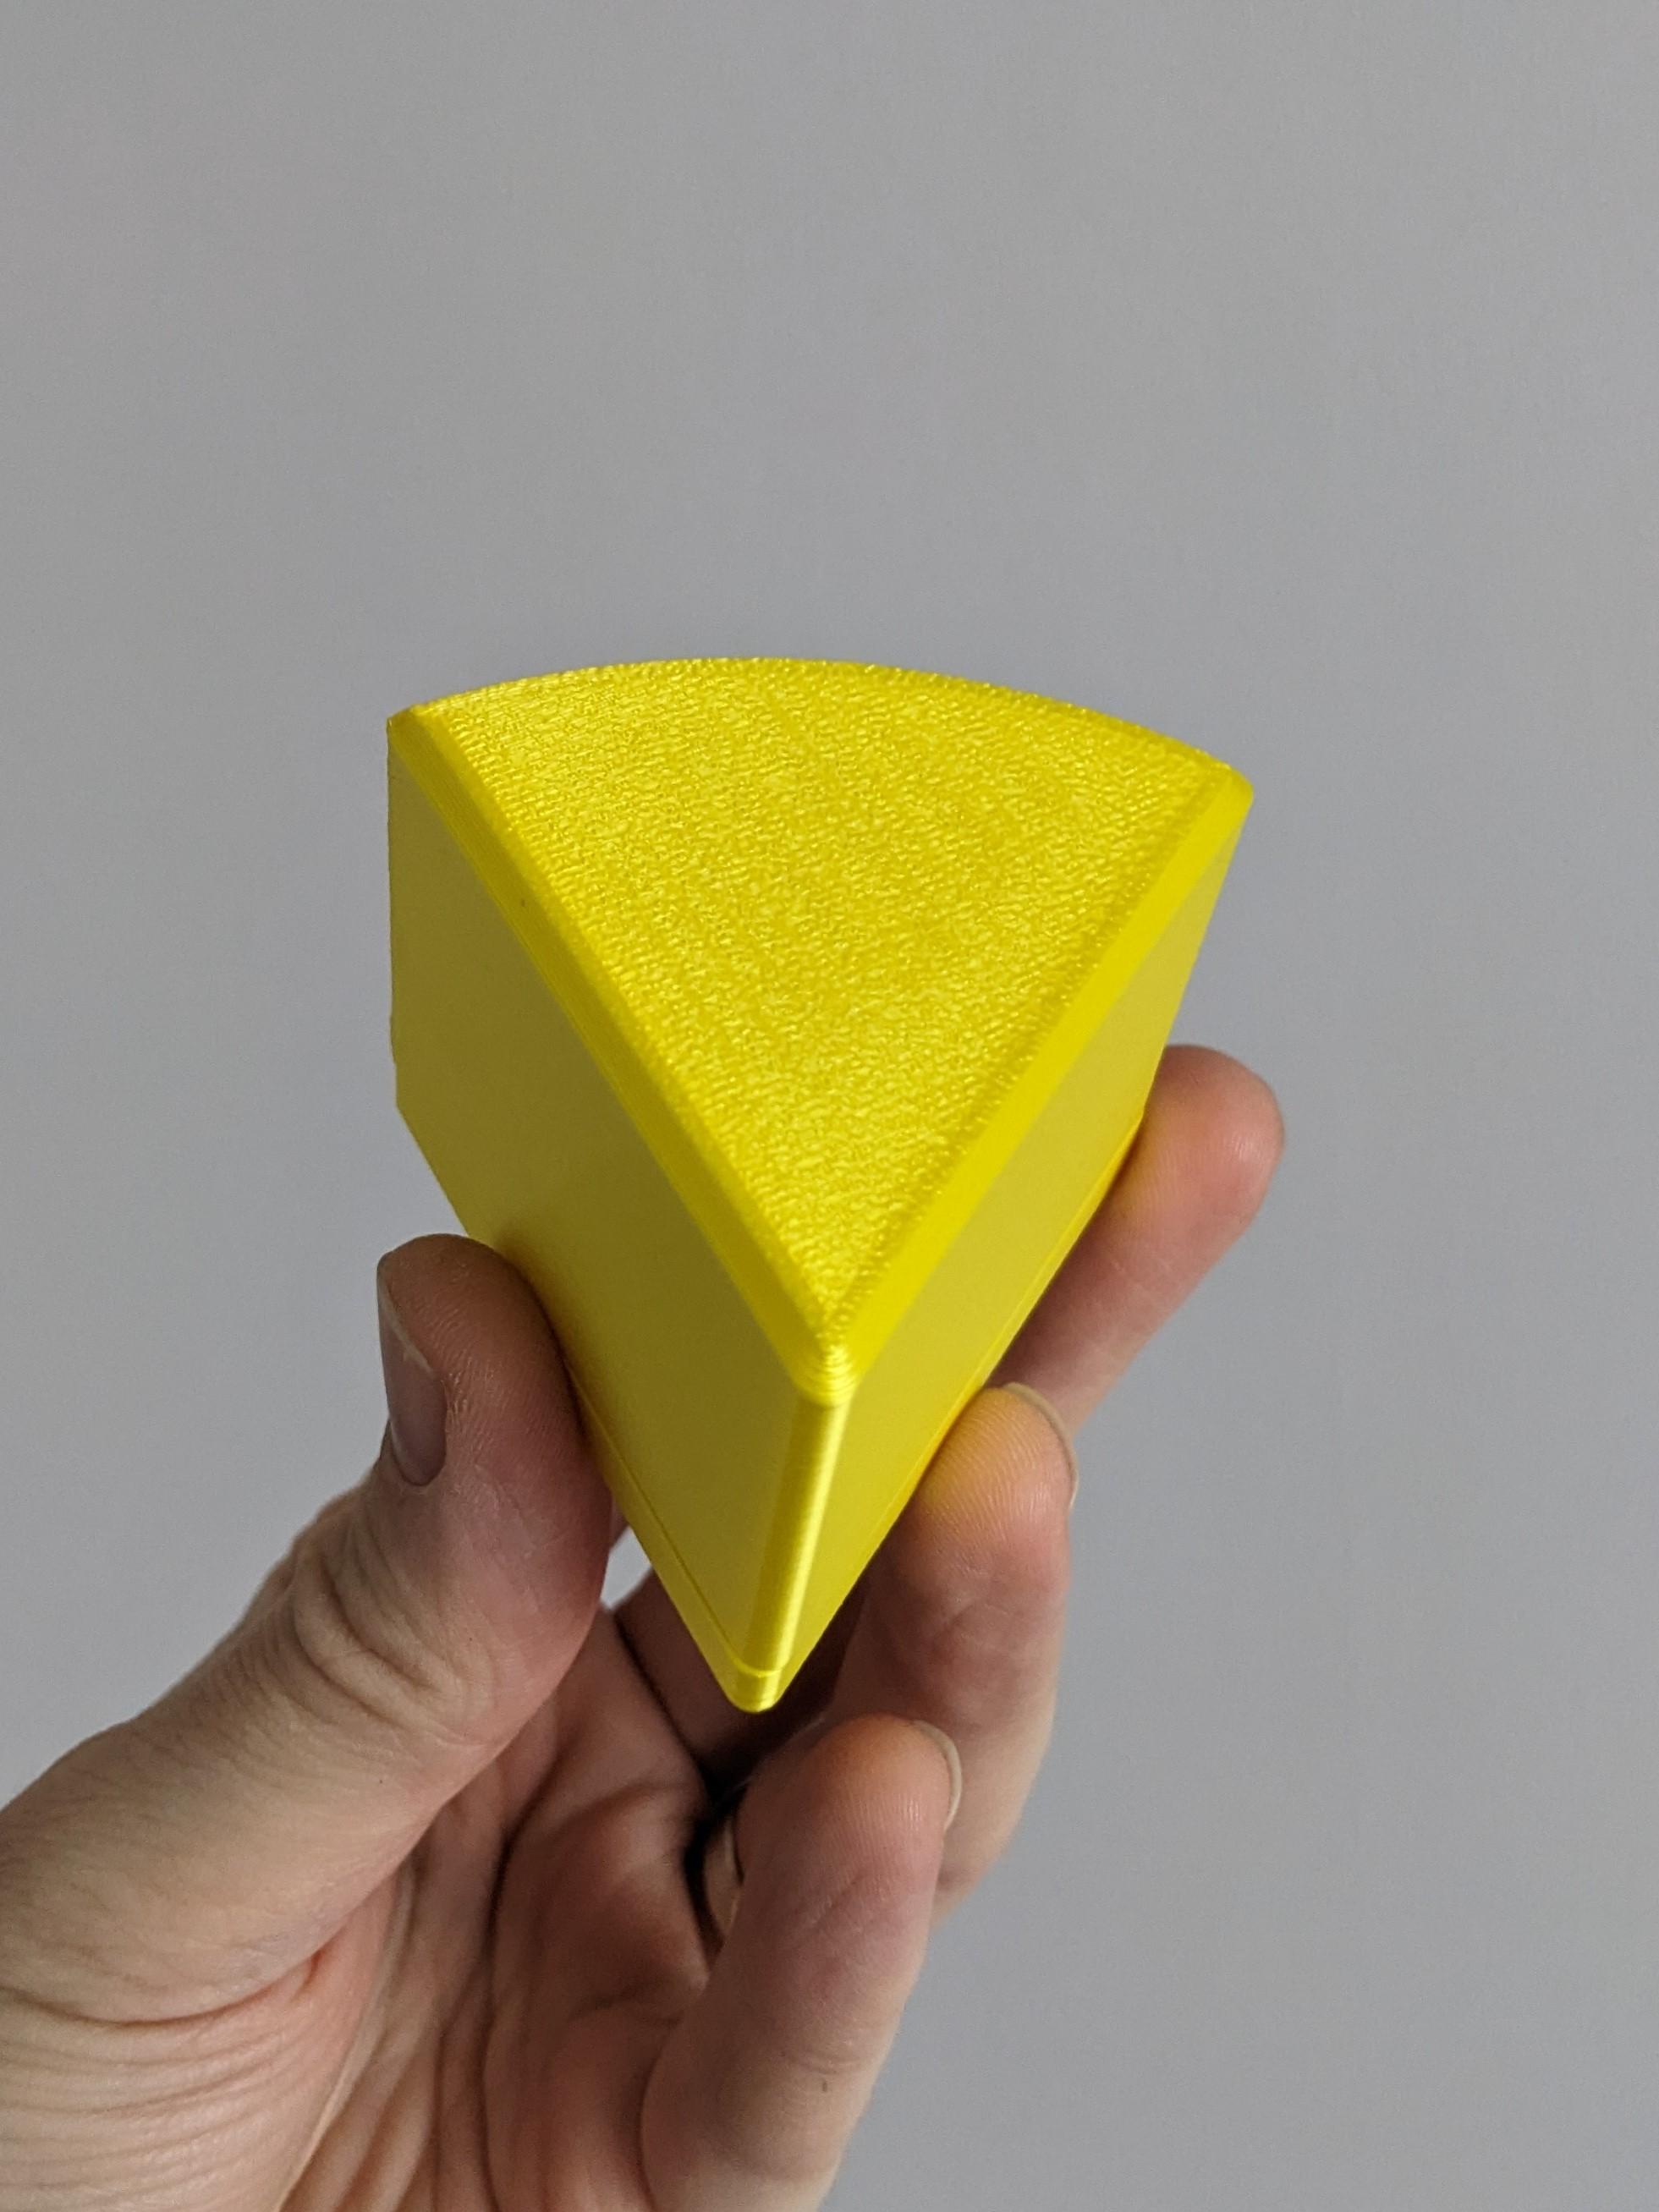 Cheesy Box - Holes in lid 3d model